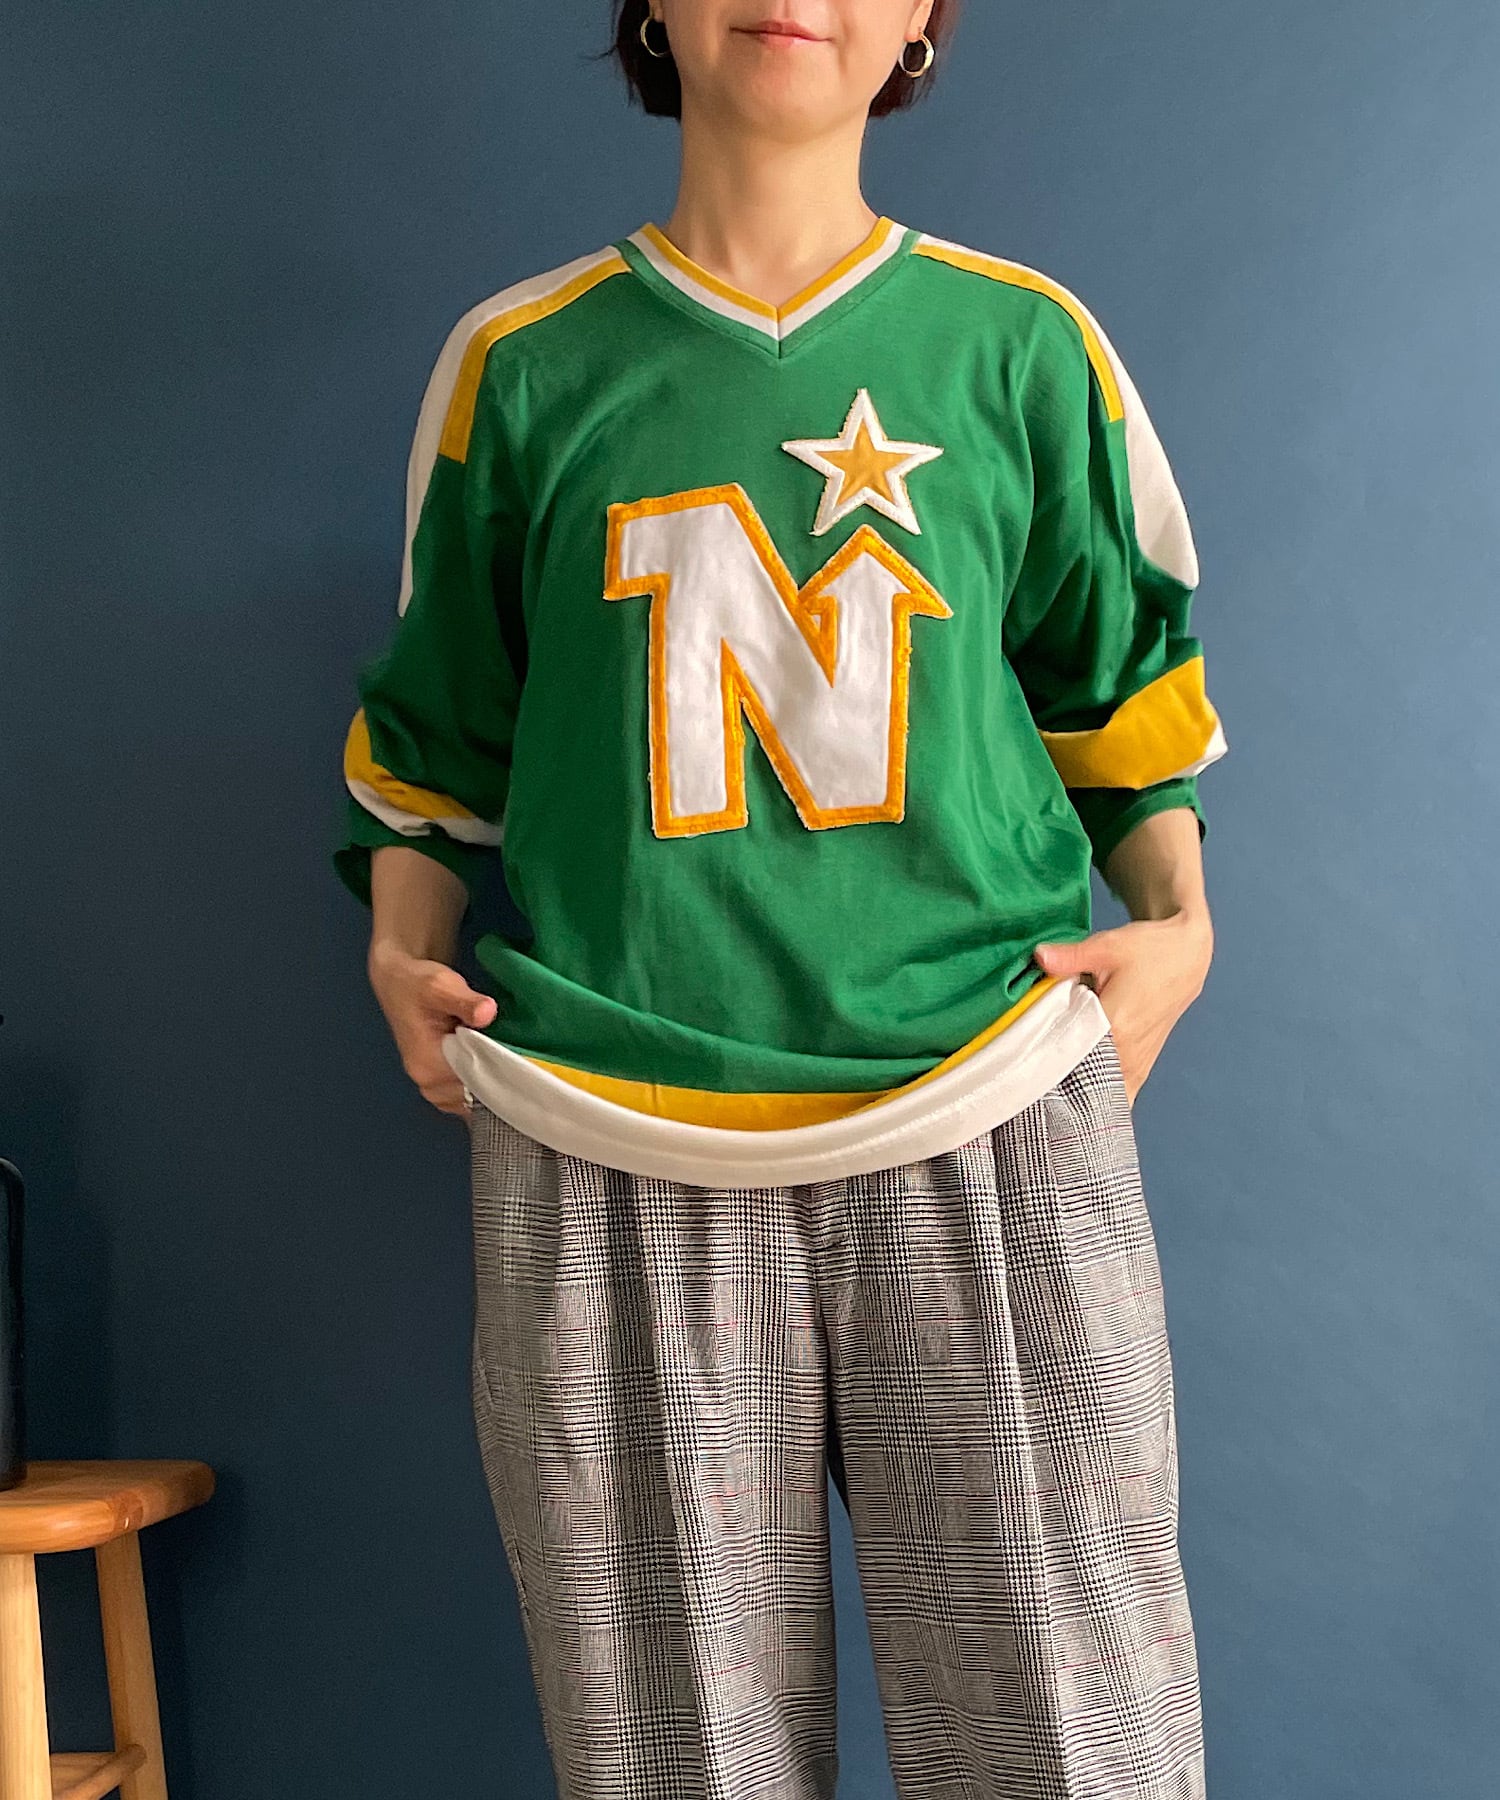 SK Sandow Sporting Knit Minnesota North Stars Green Hockey Jersey　ミネソタ　ノーススターズ　ホッケージャージ